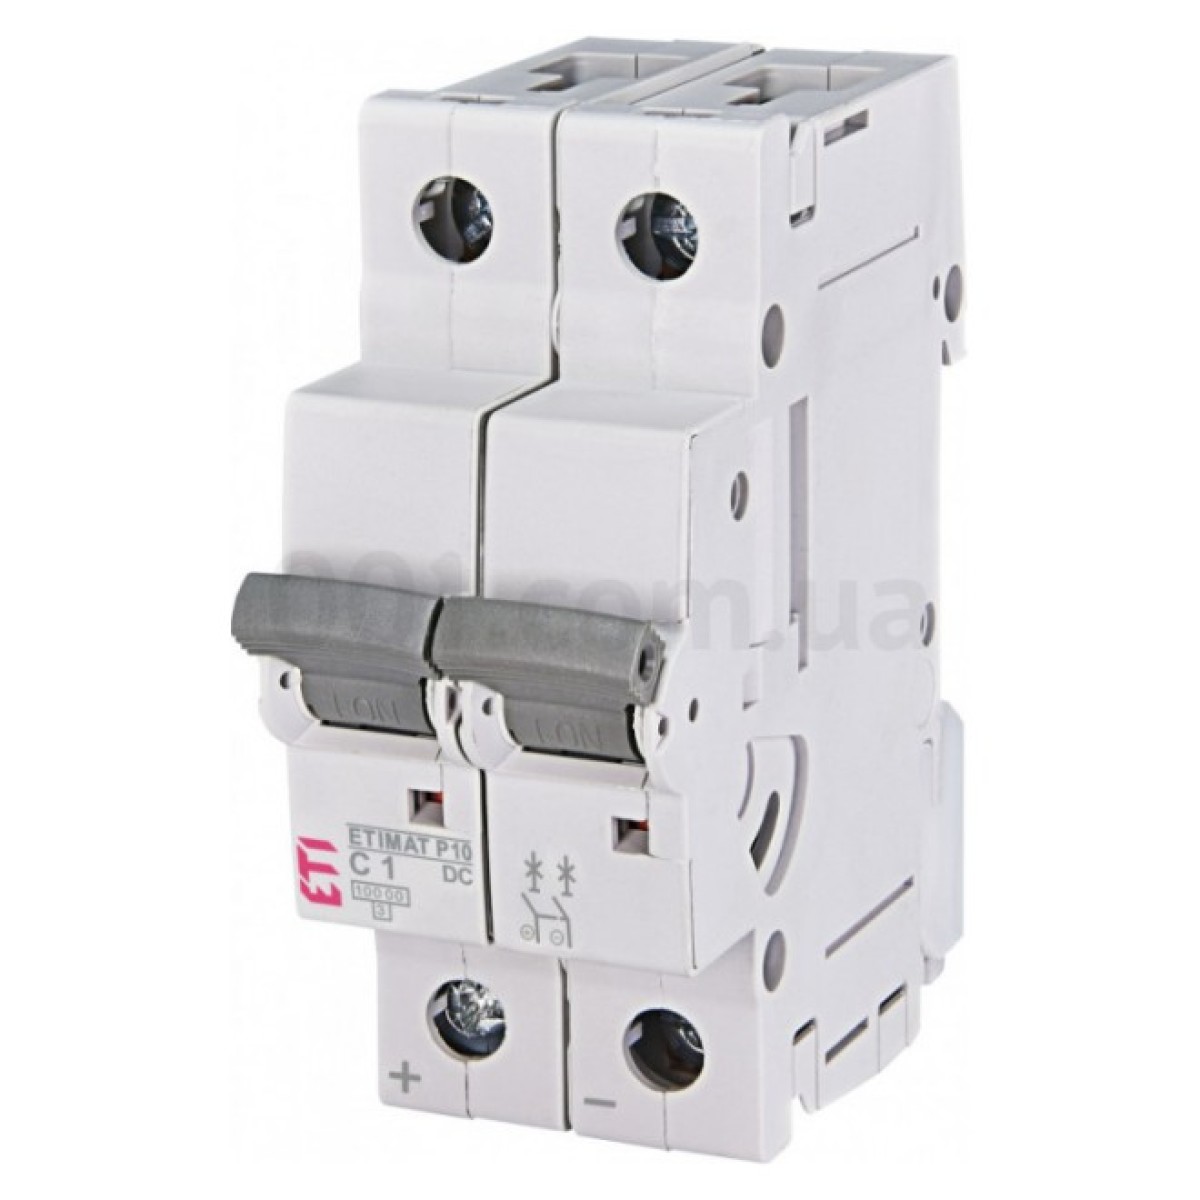 Автоматичний вимикач ETIMAT P10 DC (10кА) 2P 1 А хар-ка C, ETI 98_98.jpg - фото 1